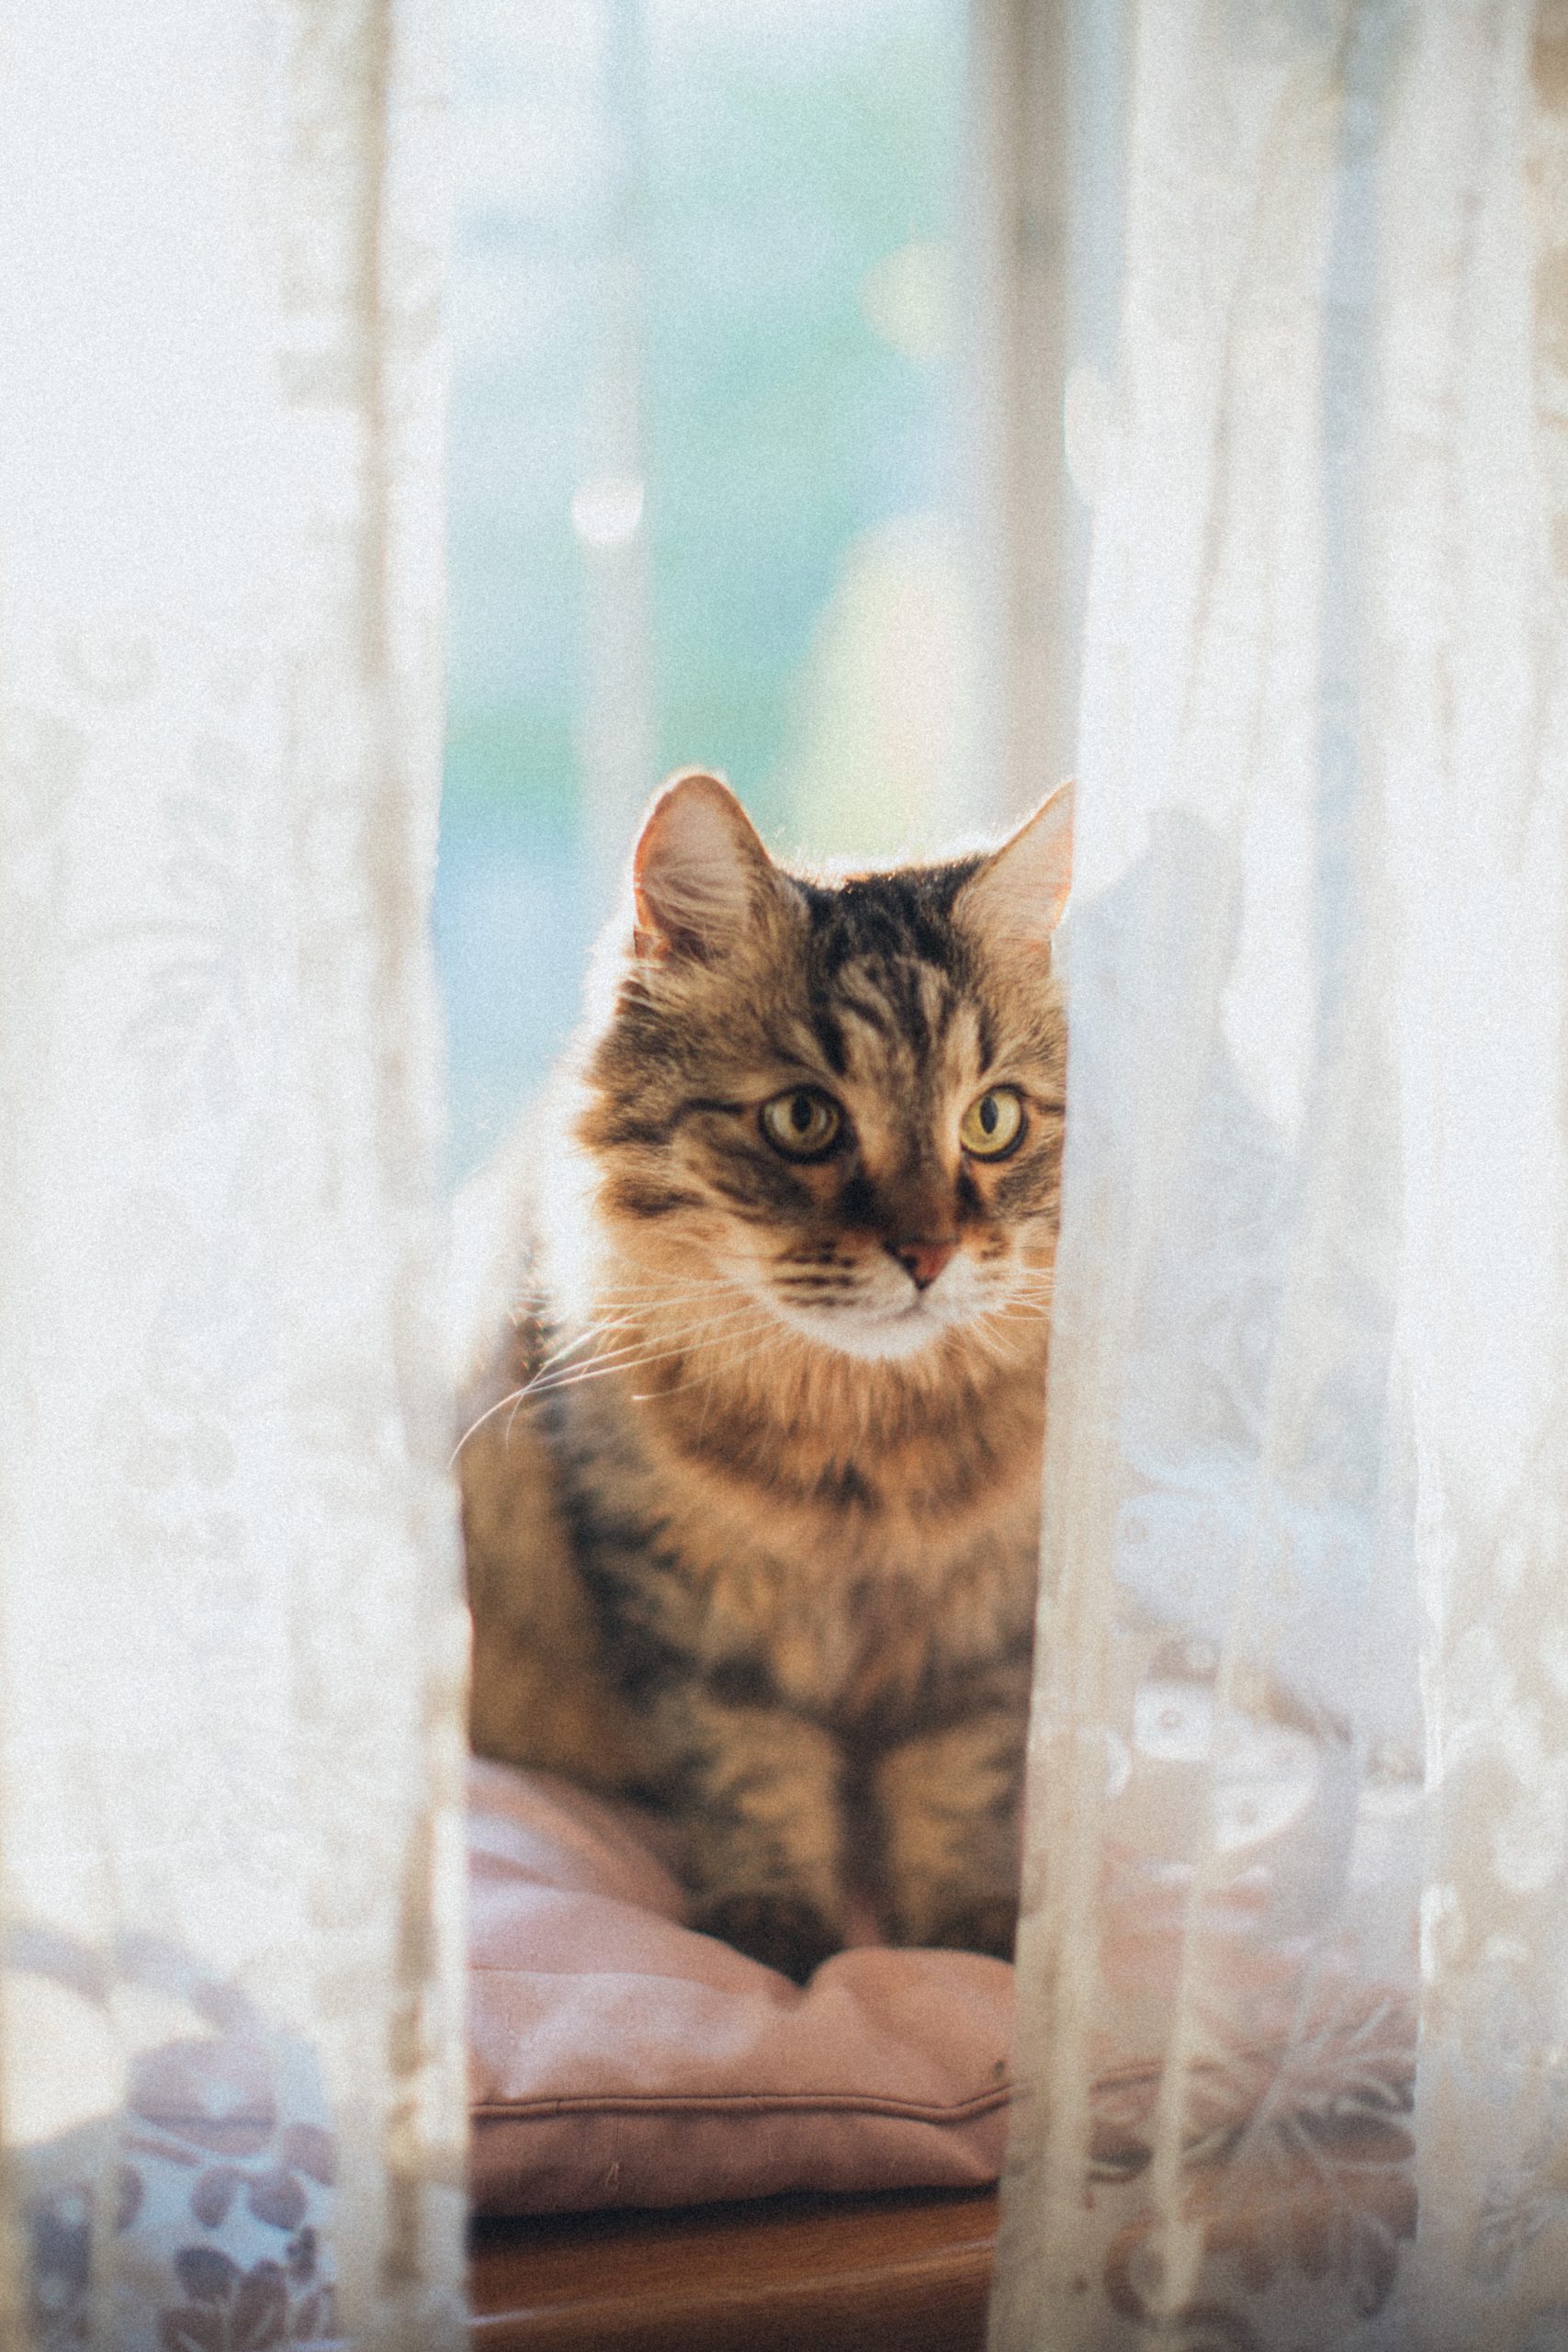 Cat sitting on cushion behind curtains.